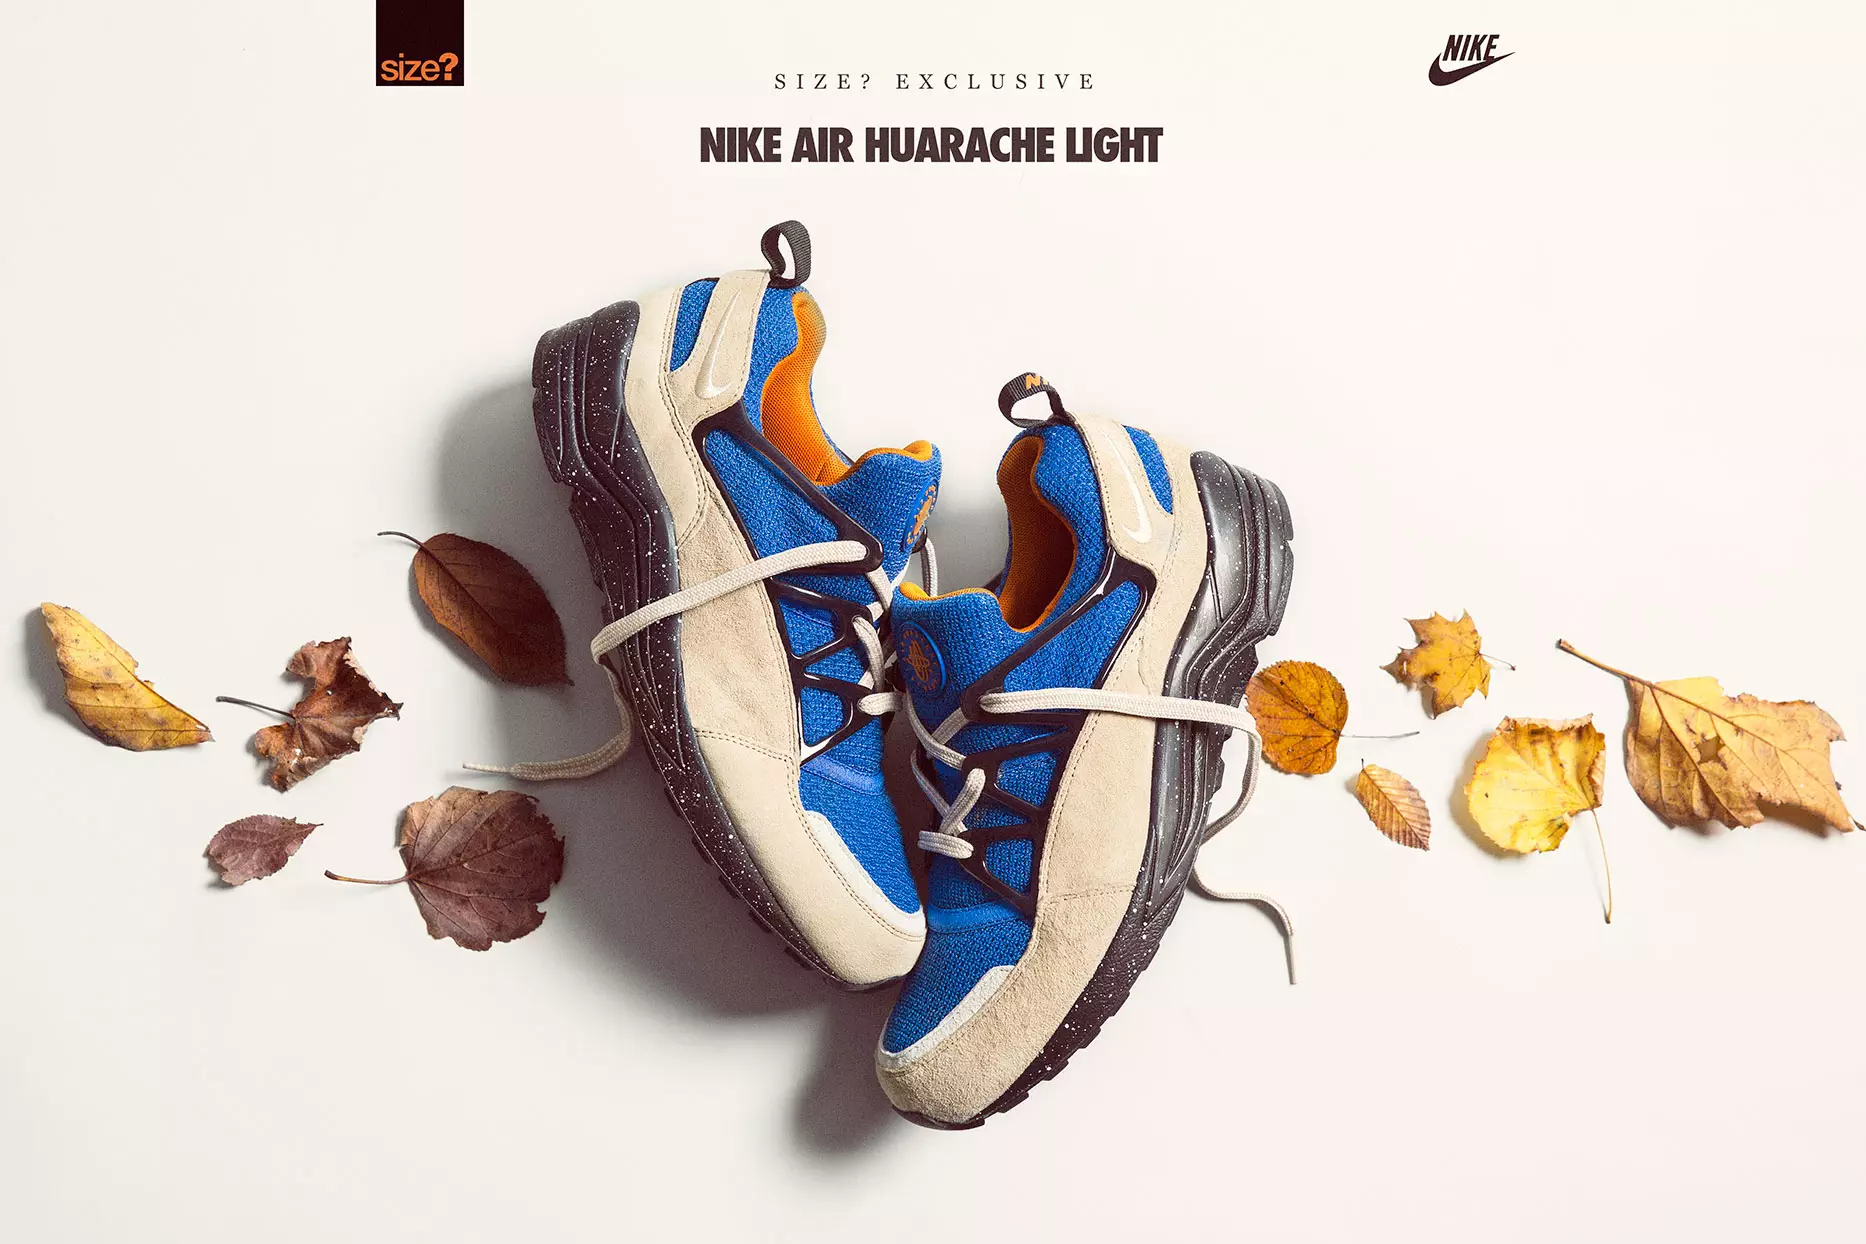 Nike Air Huarache Light – size? Exclusive - Proper Magazine